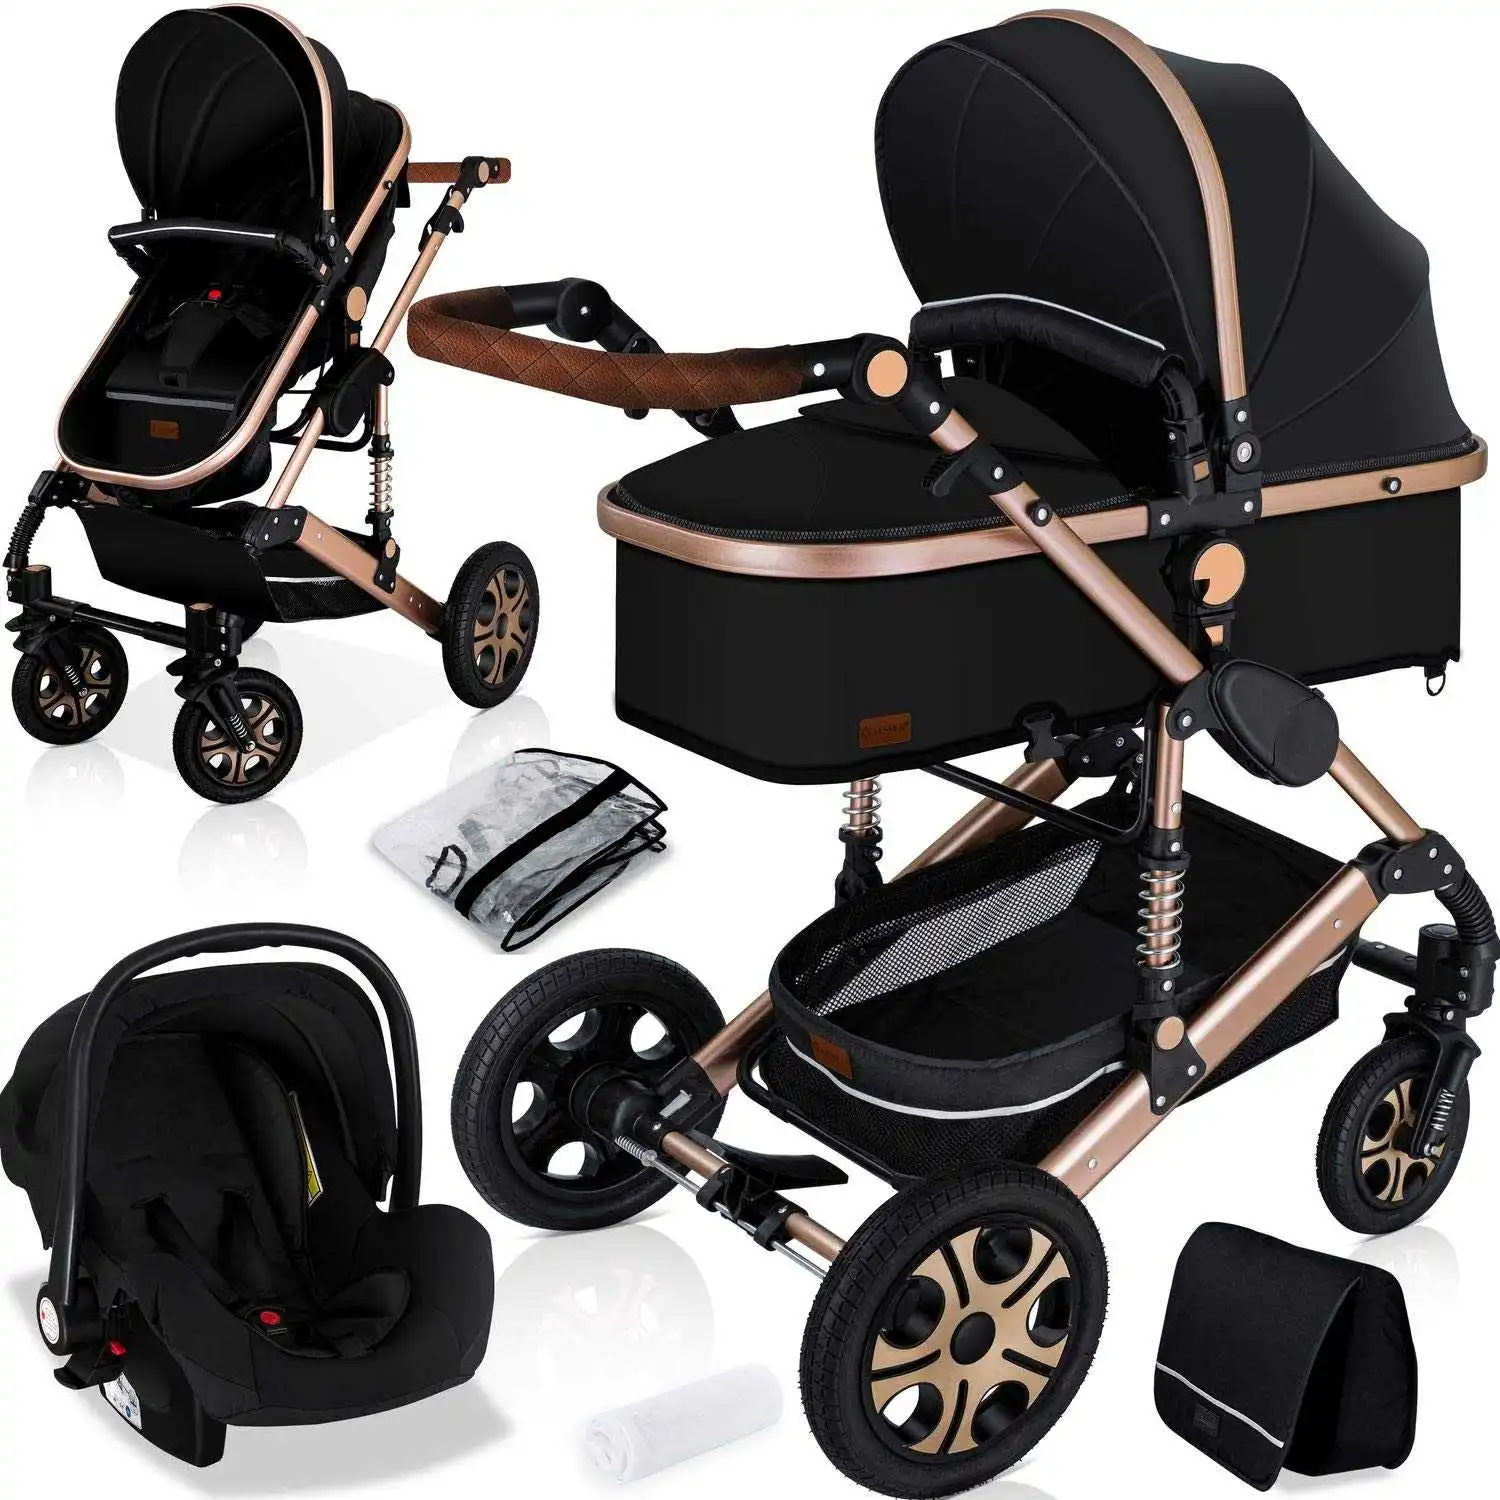 Fashionable Baby Kinderwagen 3 In 1 Compact Stroller Luxury Pram For Newborn - Buy Belecoo Stroller,Foldable 3 In 1 Baby Stroller With Carseat, Baby Stroller 3 1 Luxury Baby Pram Product Alibaba.com